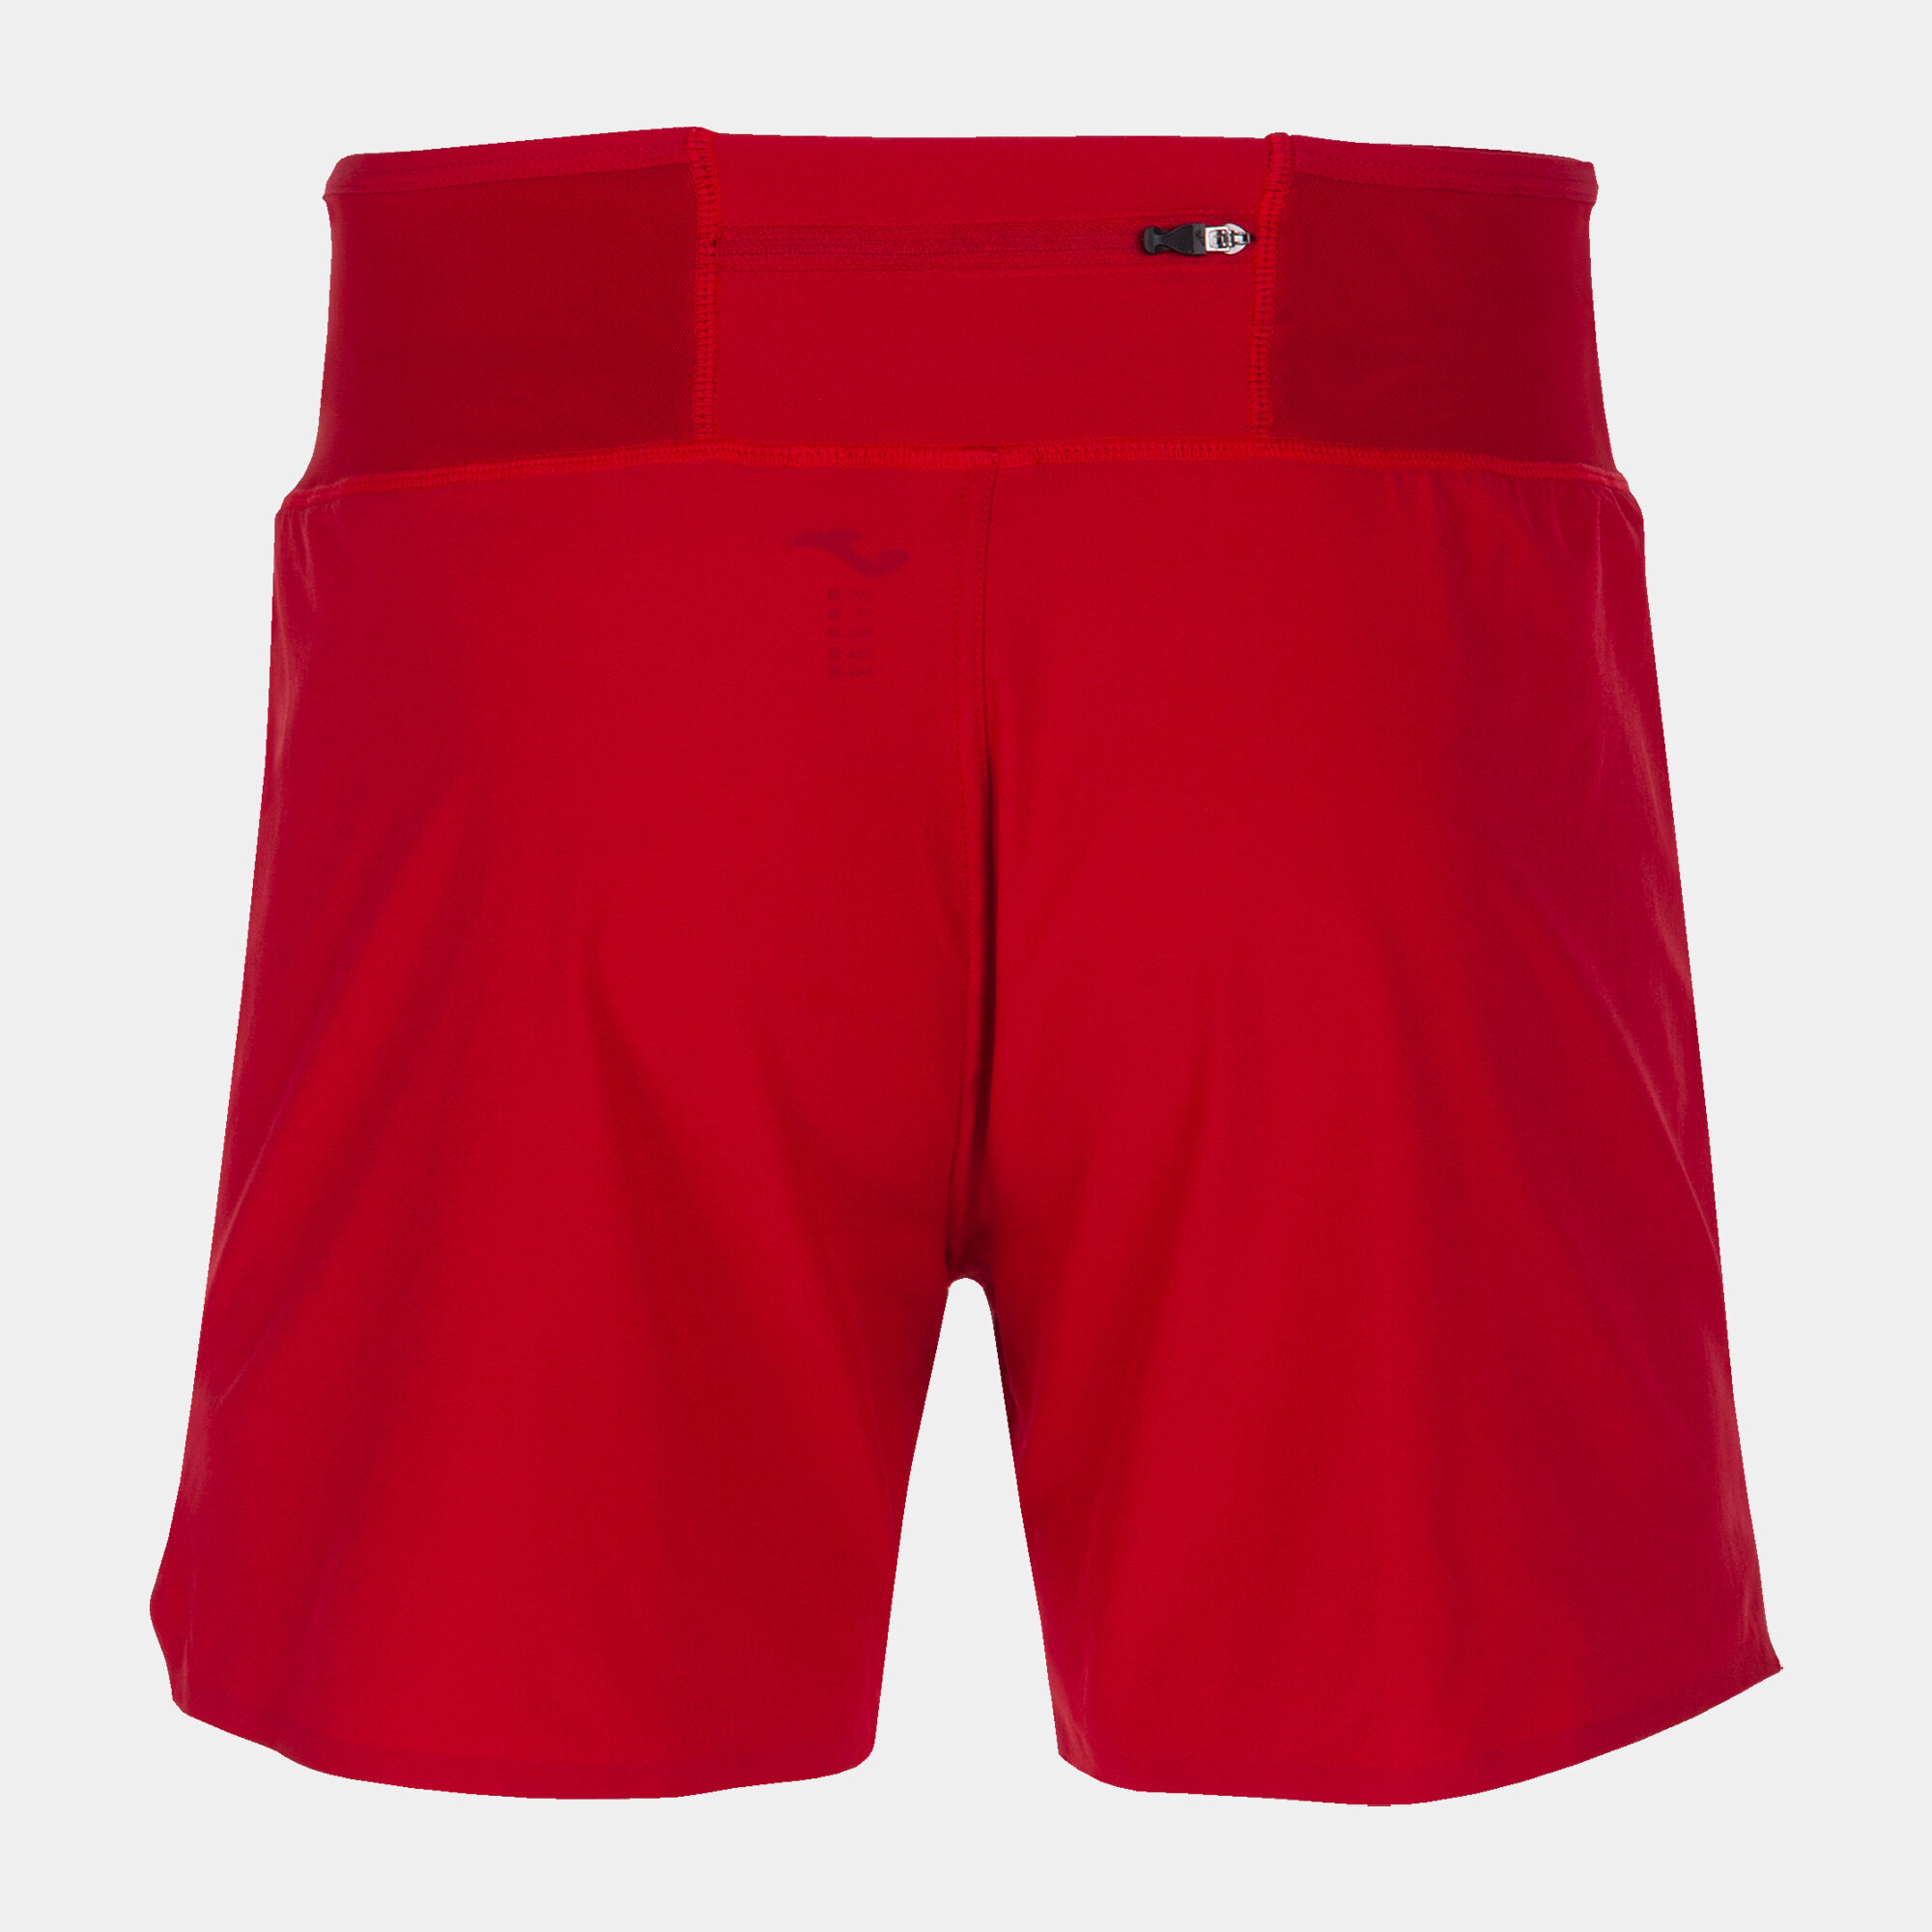 Pantaloni lungi pană bărbaȚi R-Combi roșu